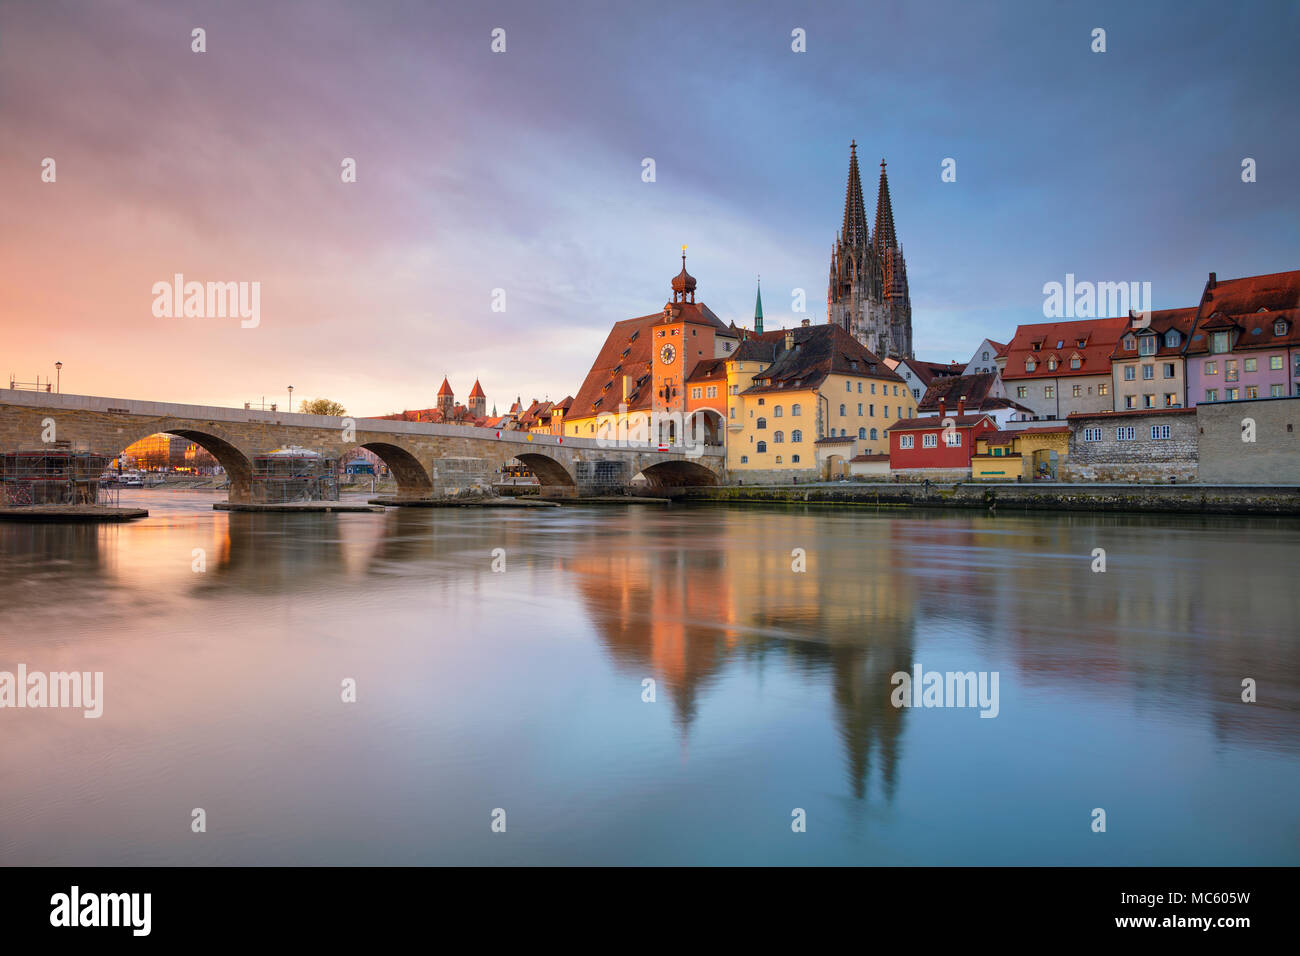 Regensburg. Cityscape image of Regensburg, Germany during spring sunrise. Stock Photo